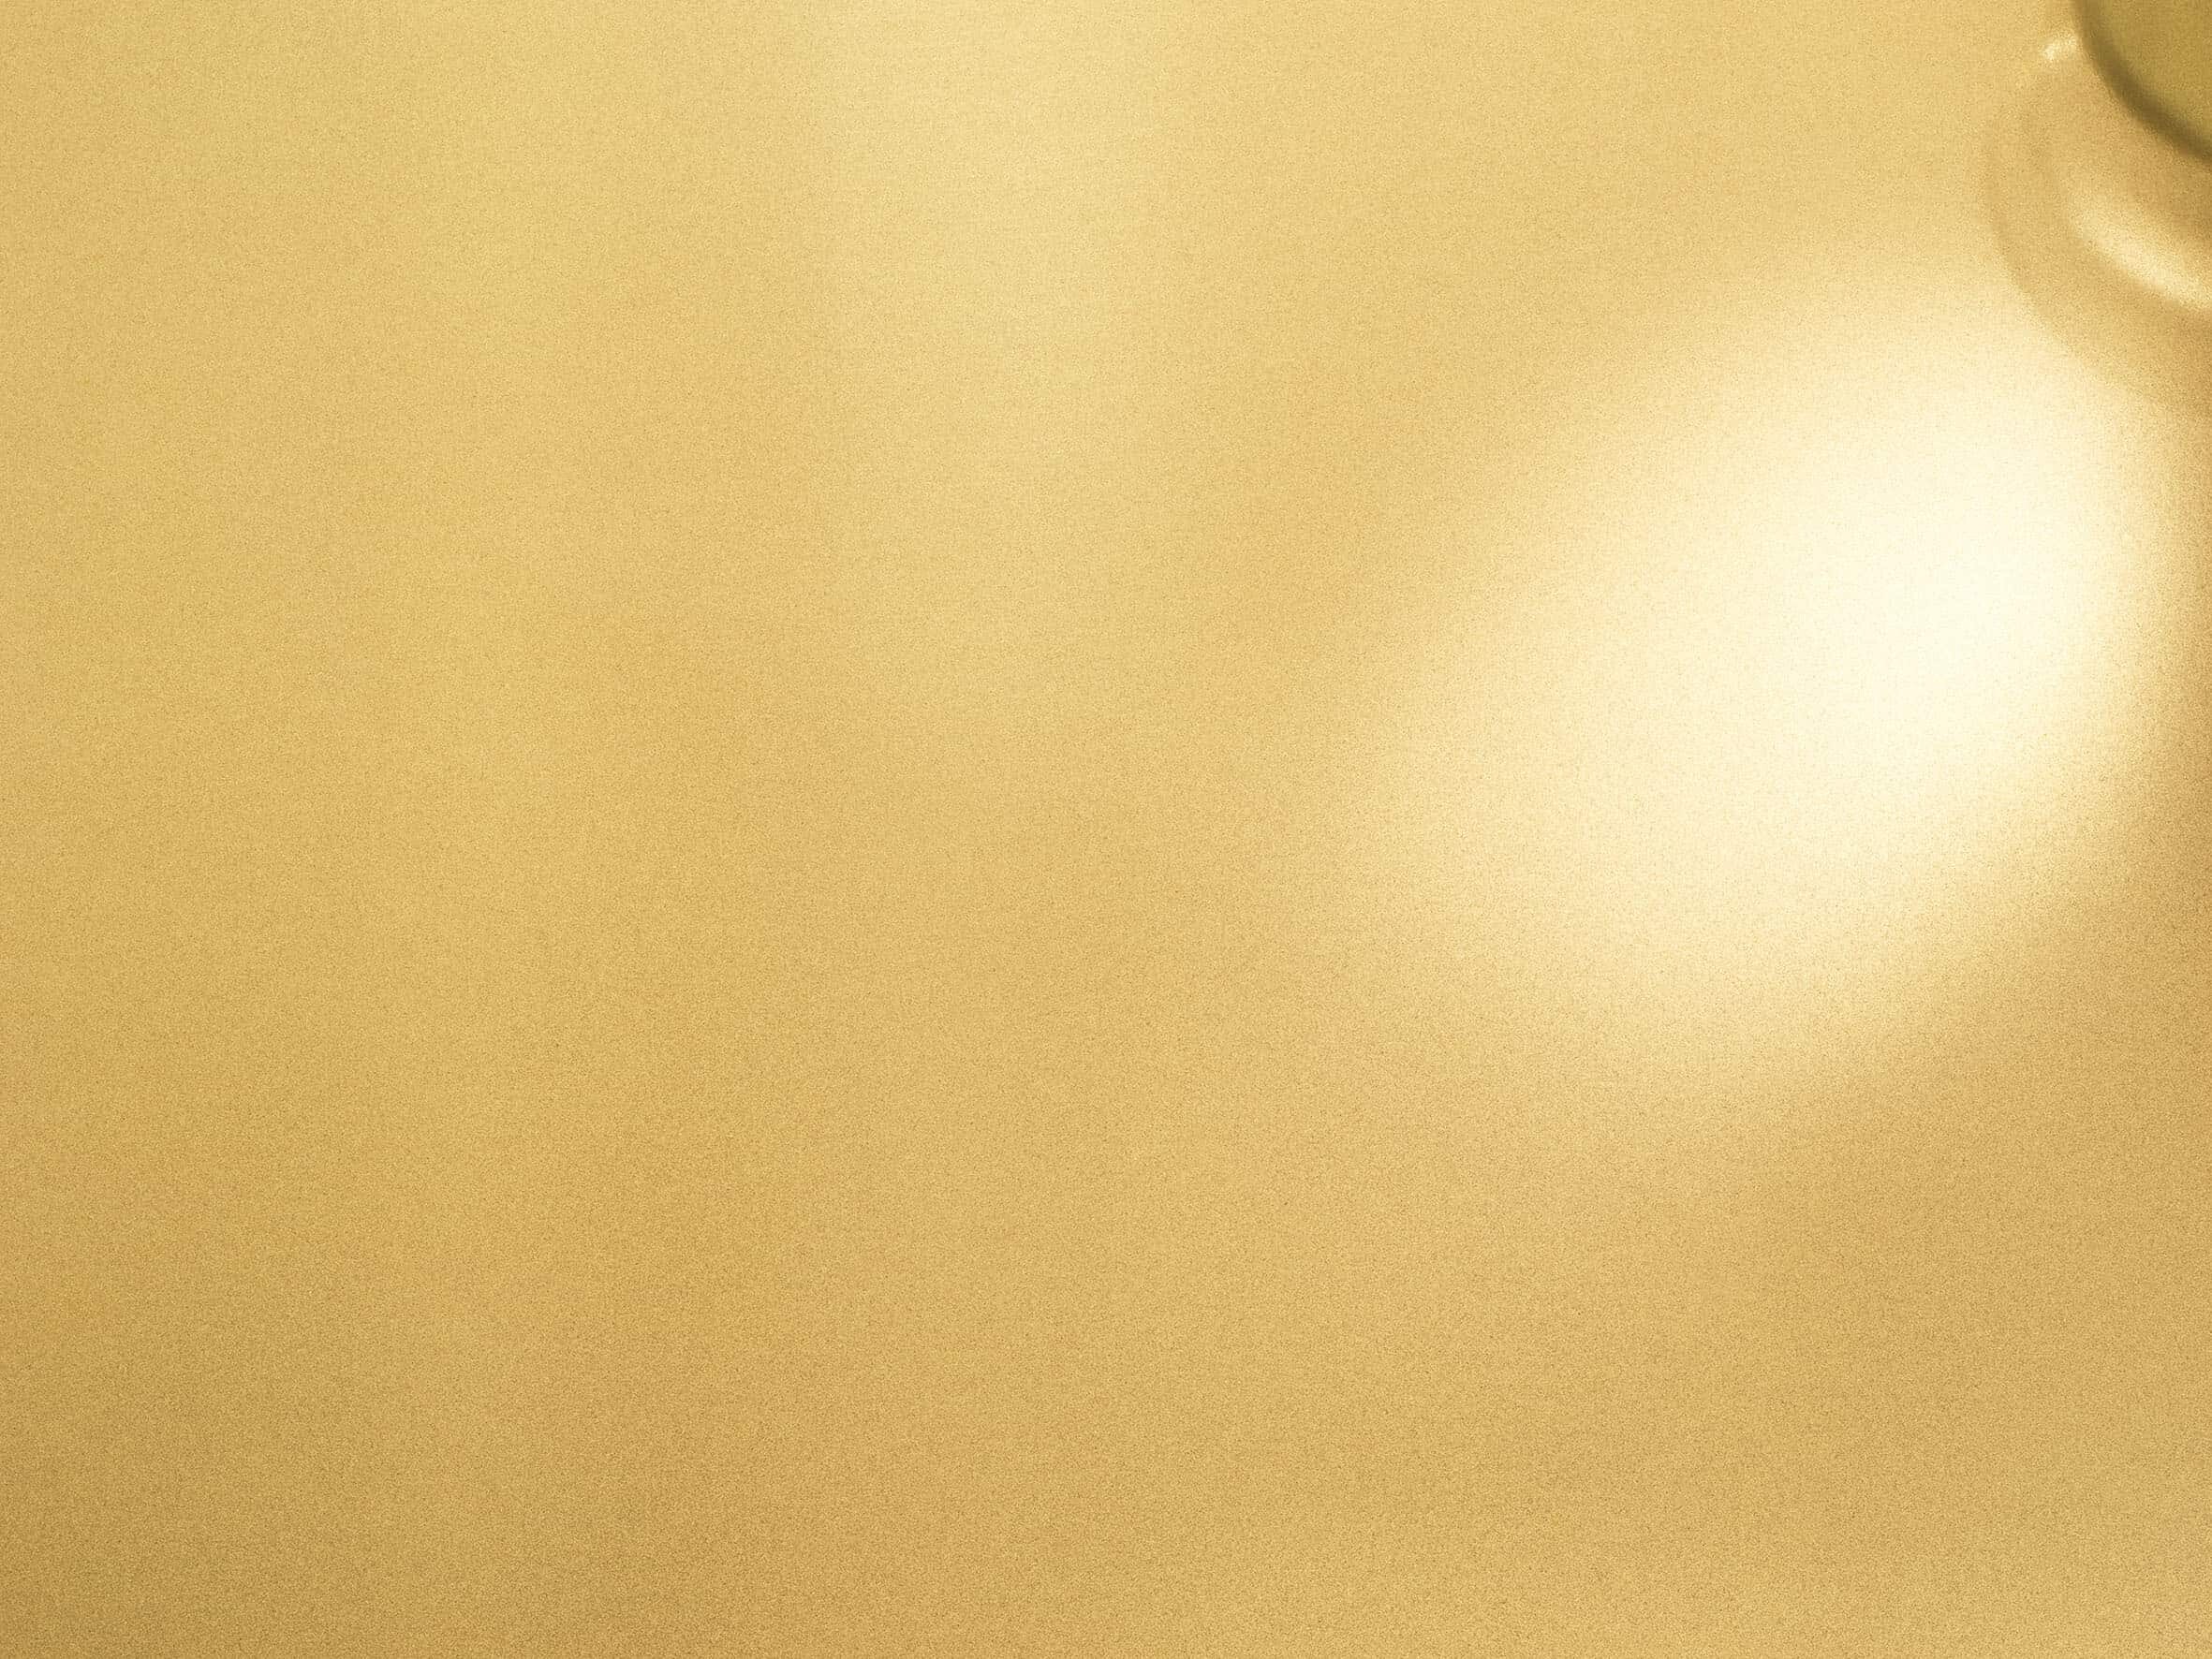 Gold Foil: Tinsel, Seemless pattern, Matt. 2370x1780 HD Wallpaper.